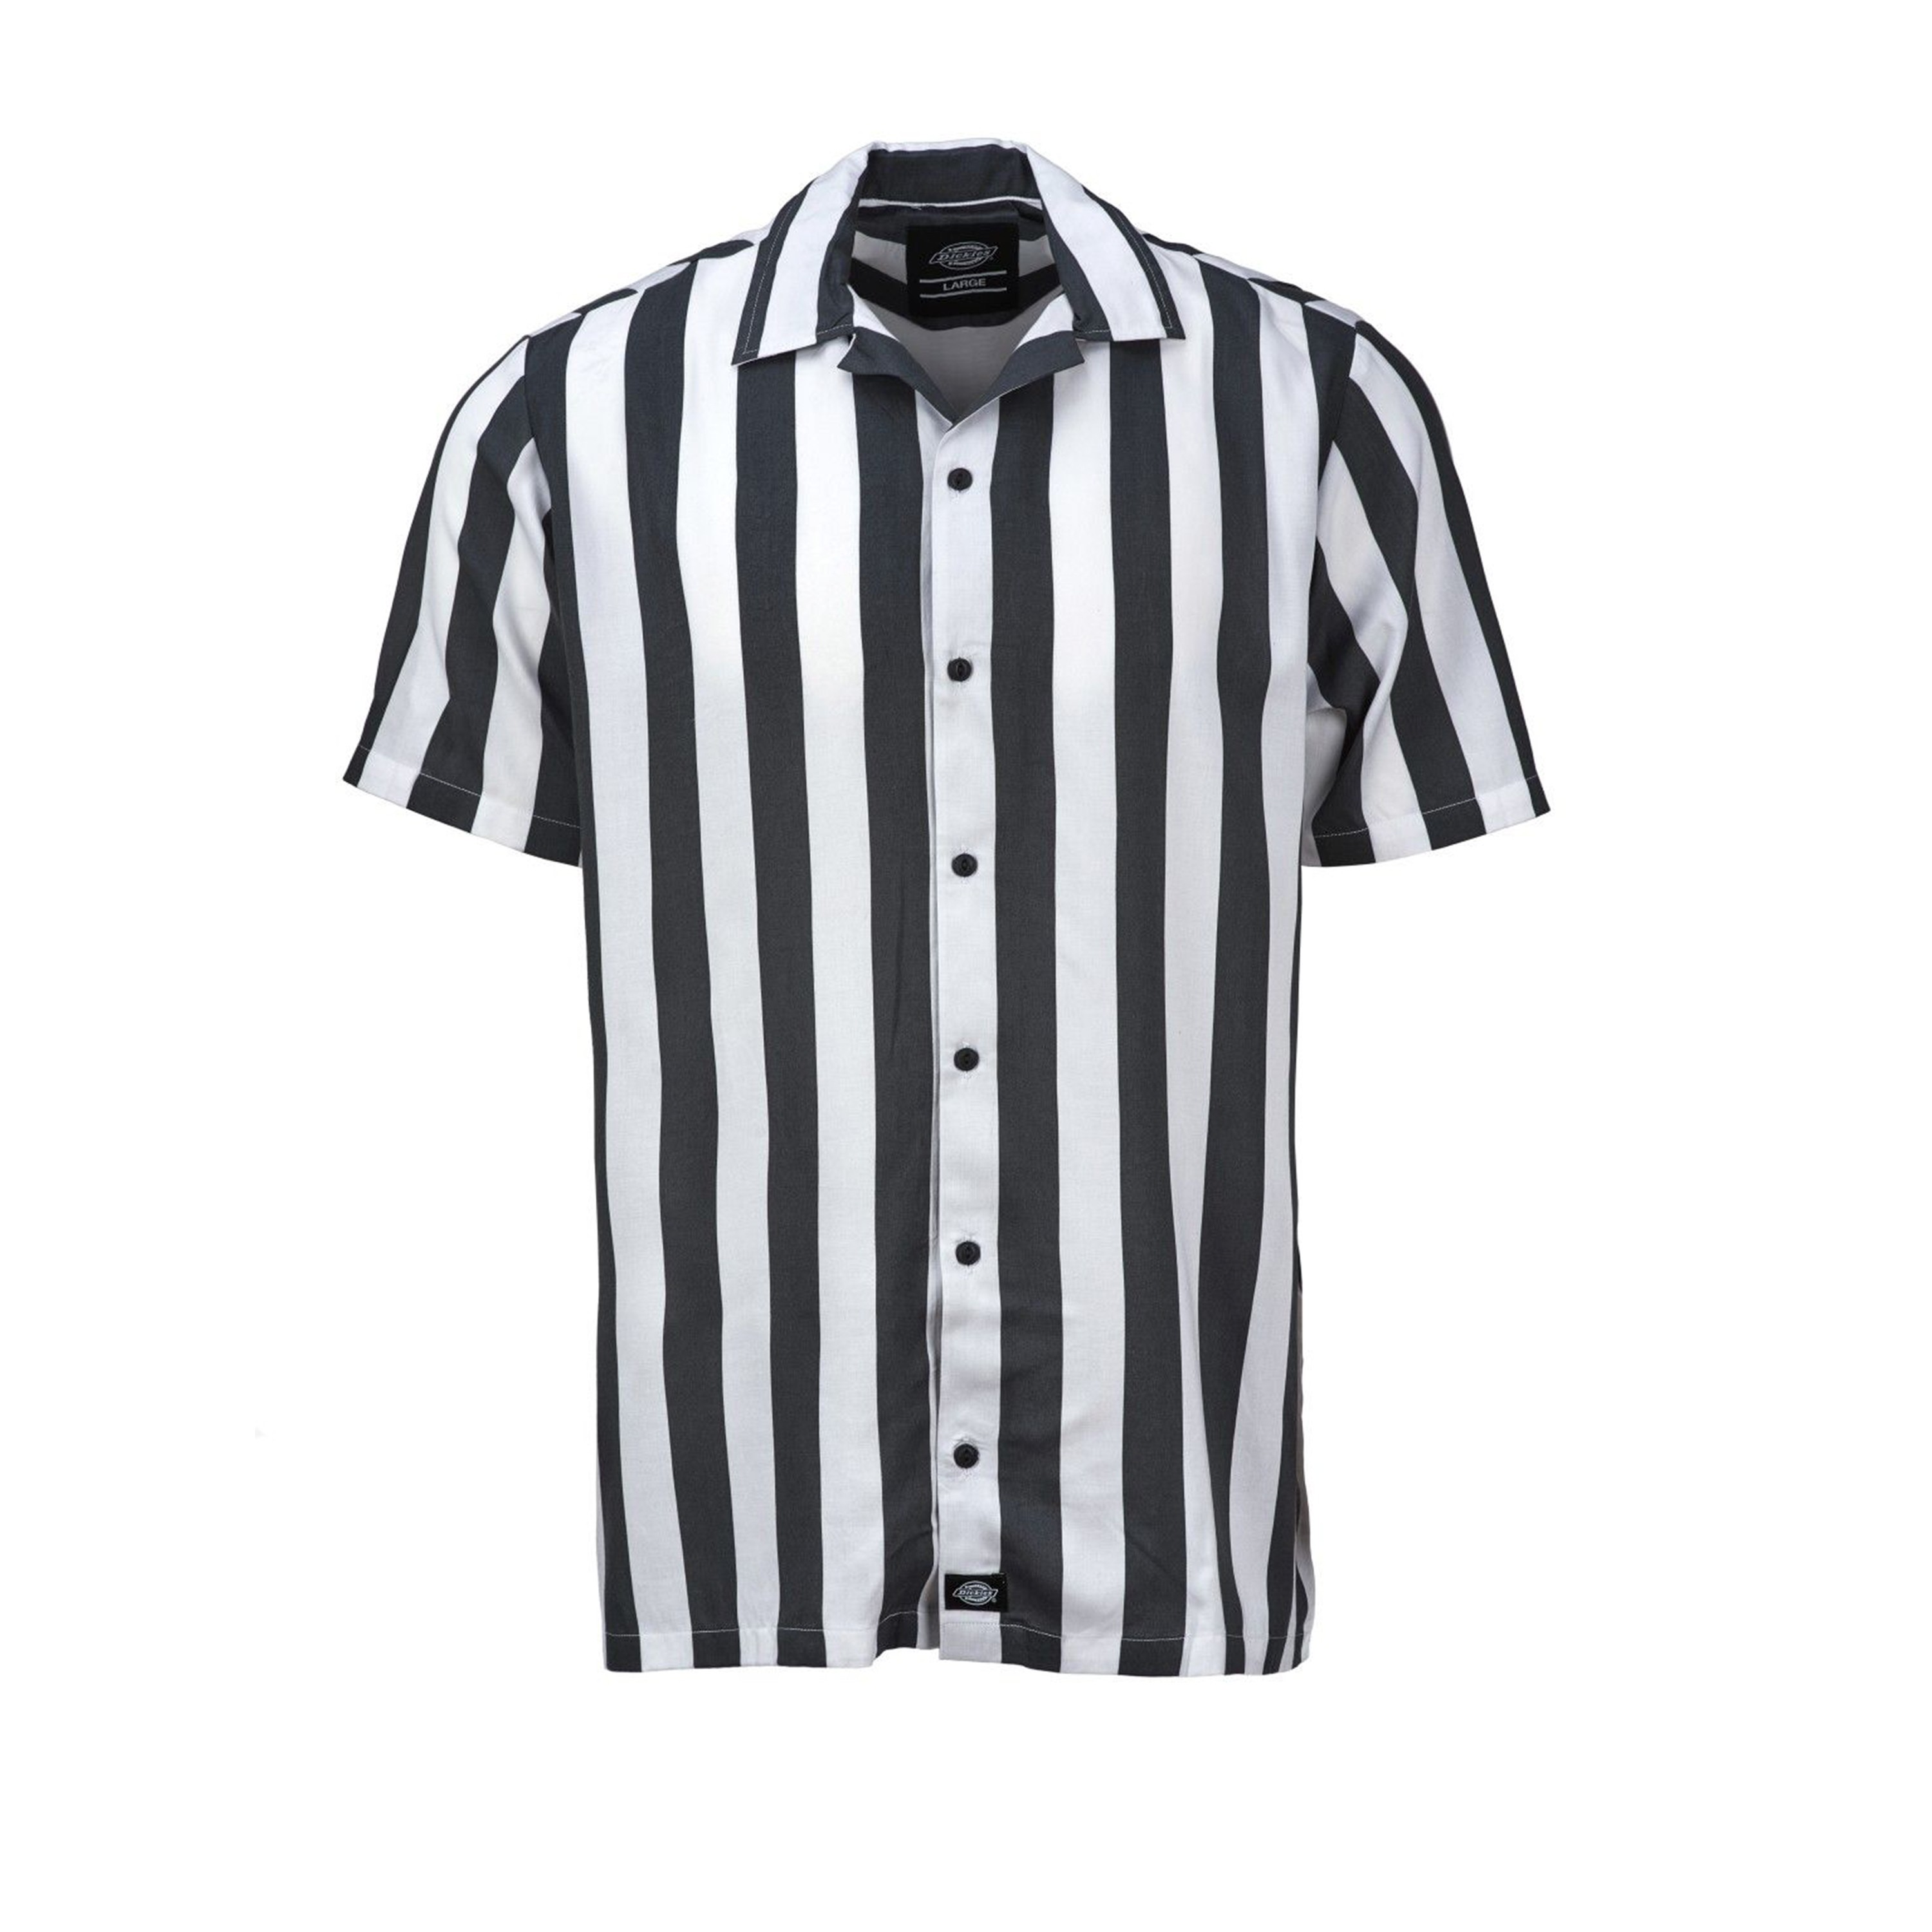 Dickies Roslyn Stripe Shirt (Charcoal Grey) - 05-200340CH - Consortium